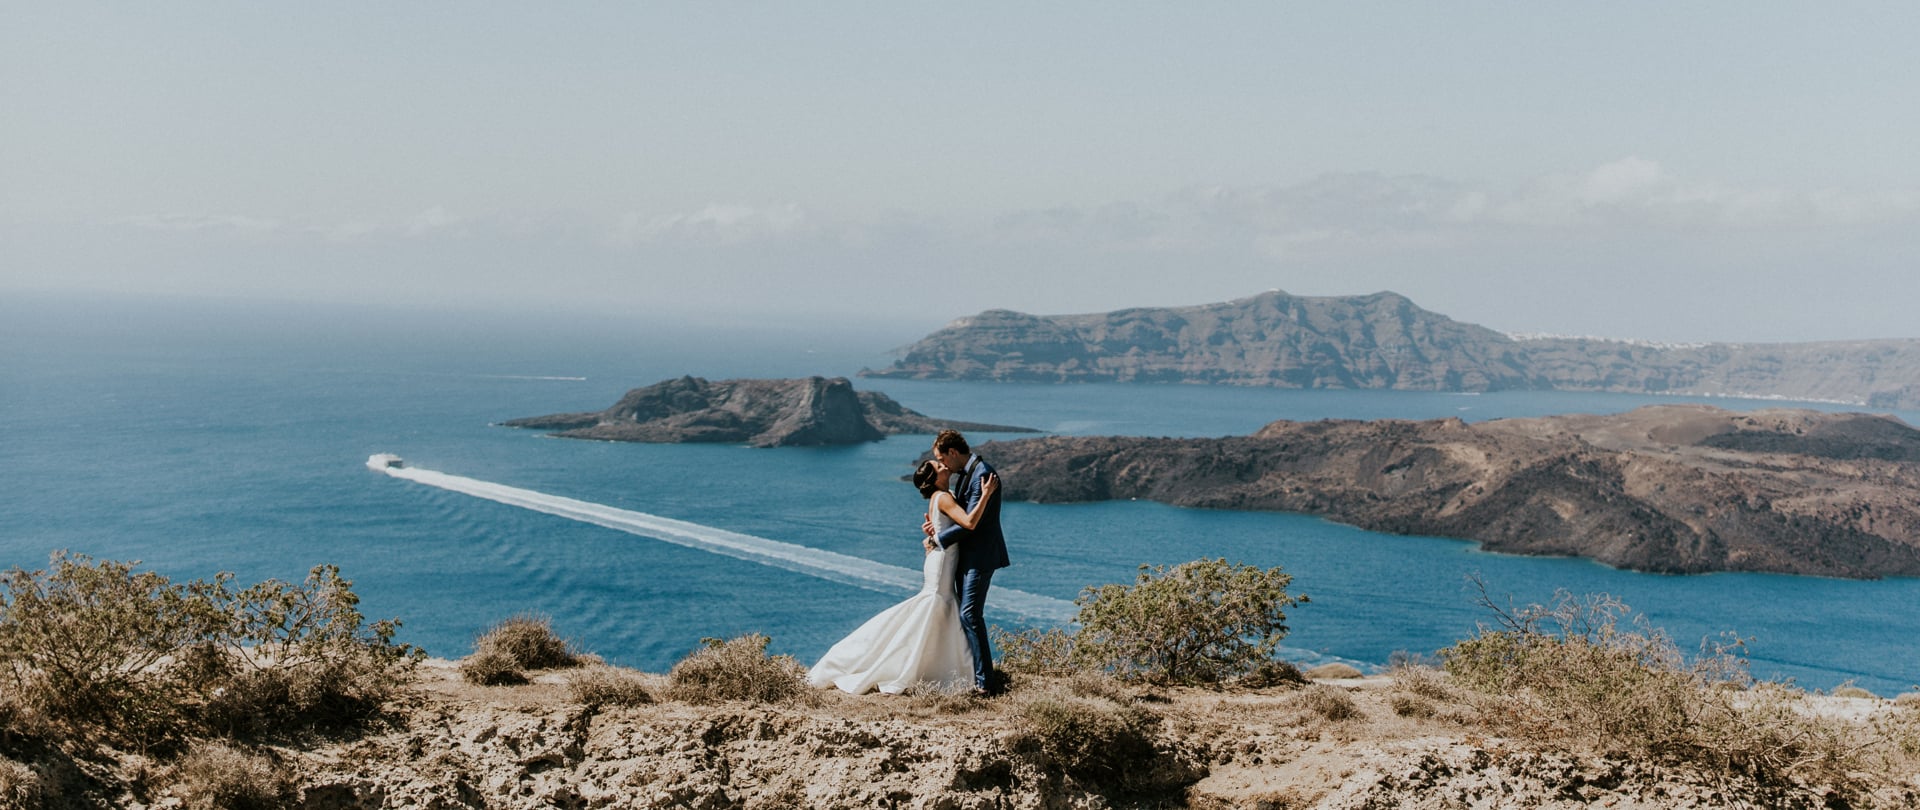 Leah & Jason Wedding Video Filmed atSantorini,Greece